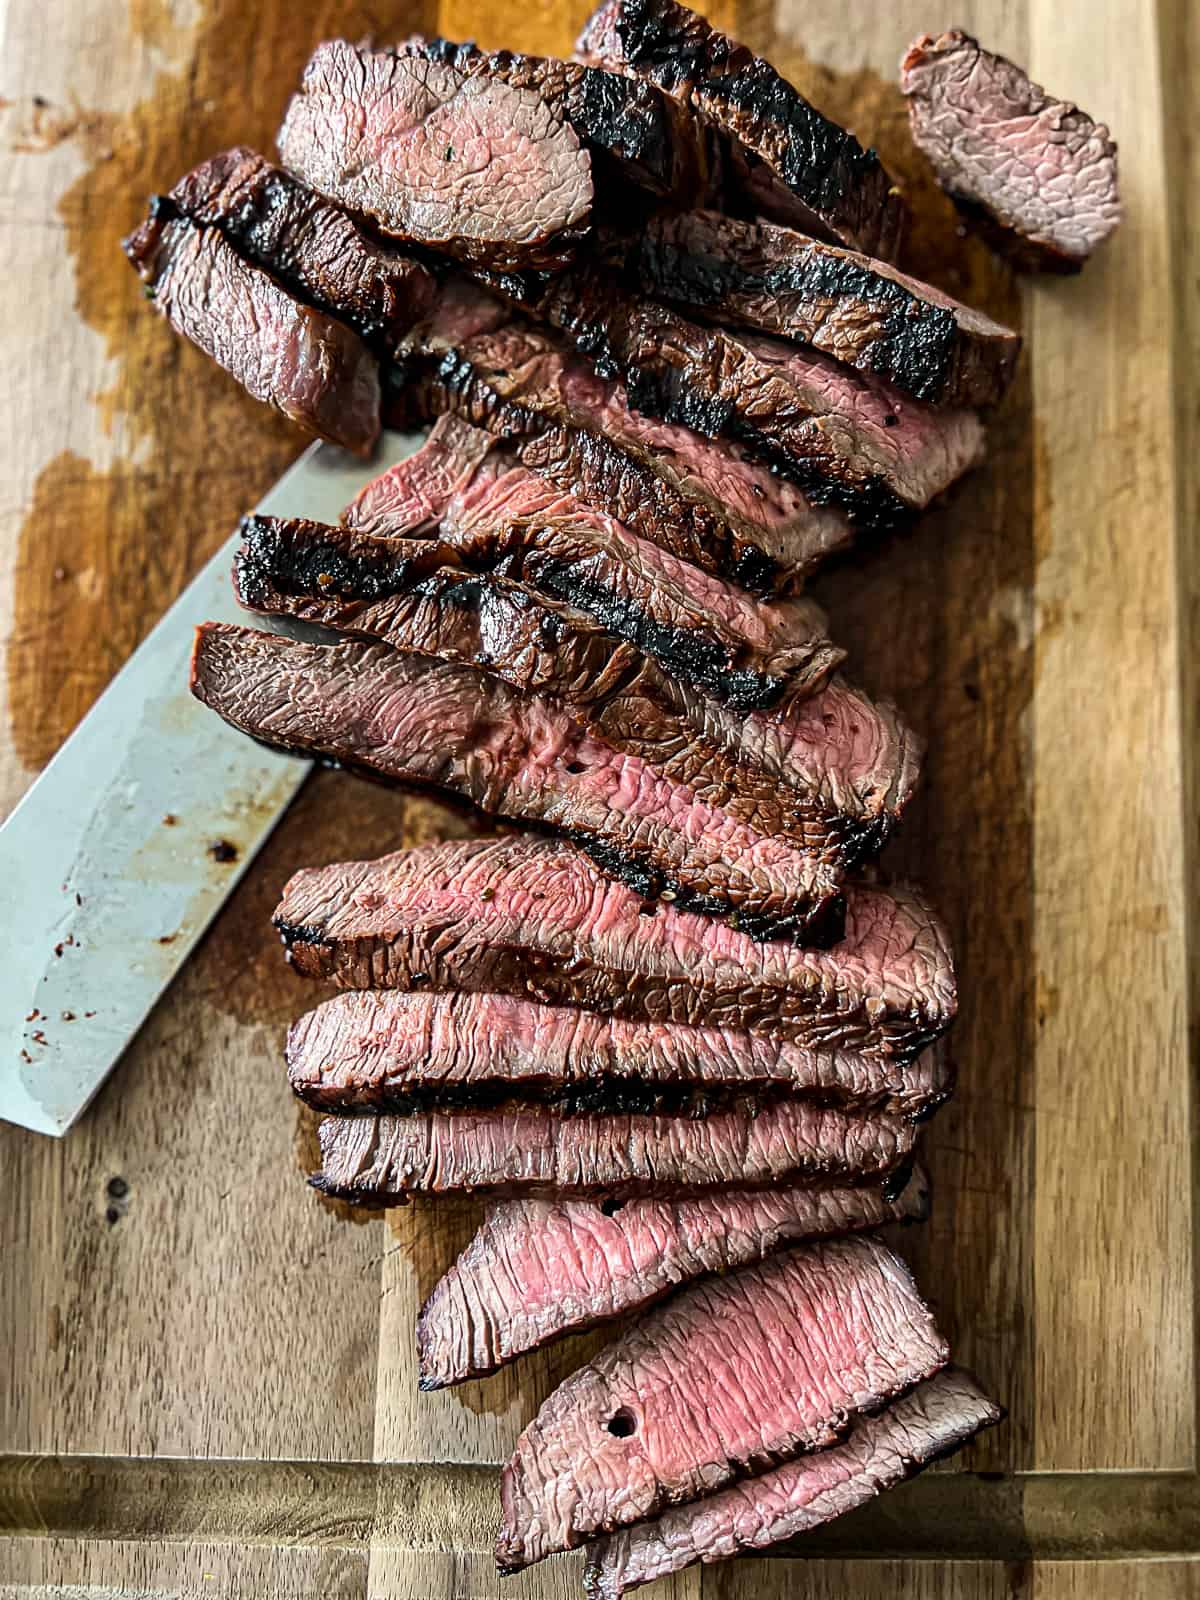 Sliced Grilled Sirloin Steak on cutting board